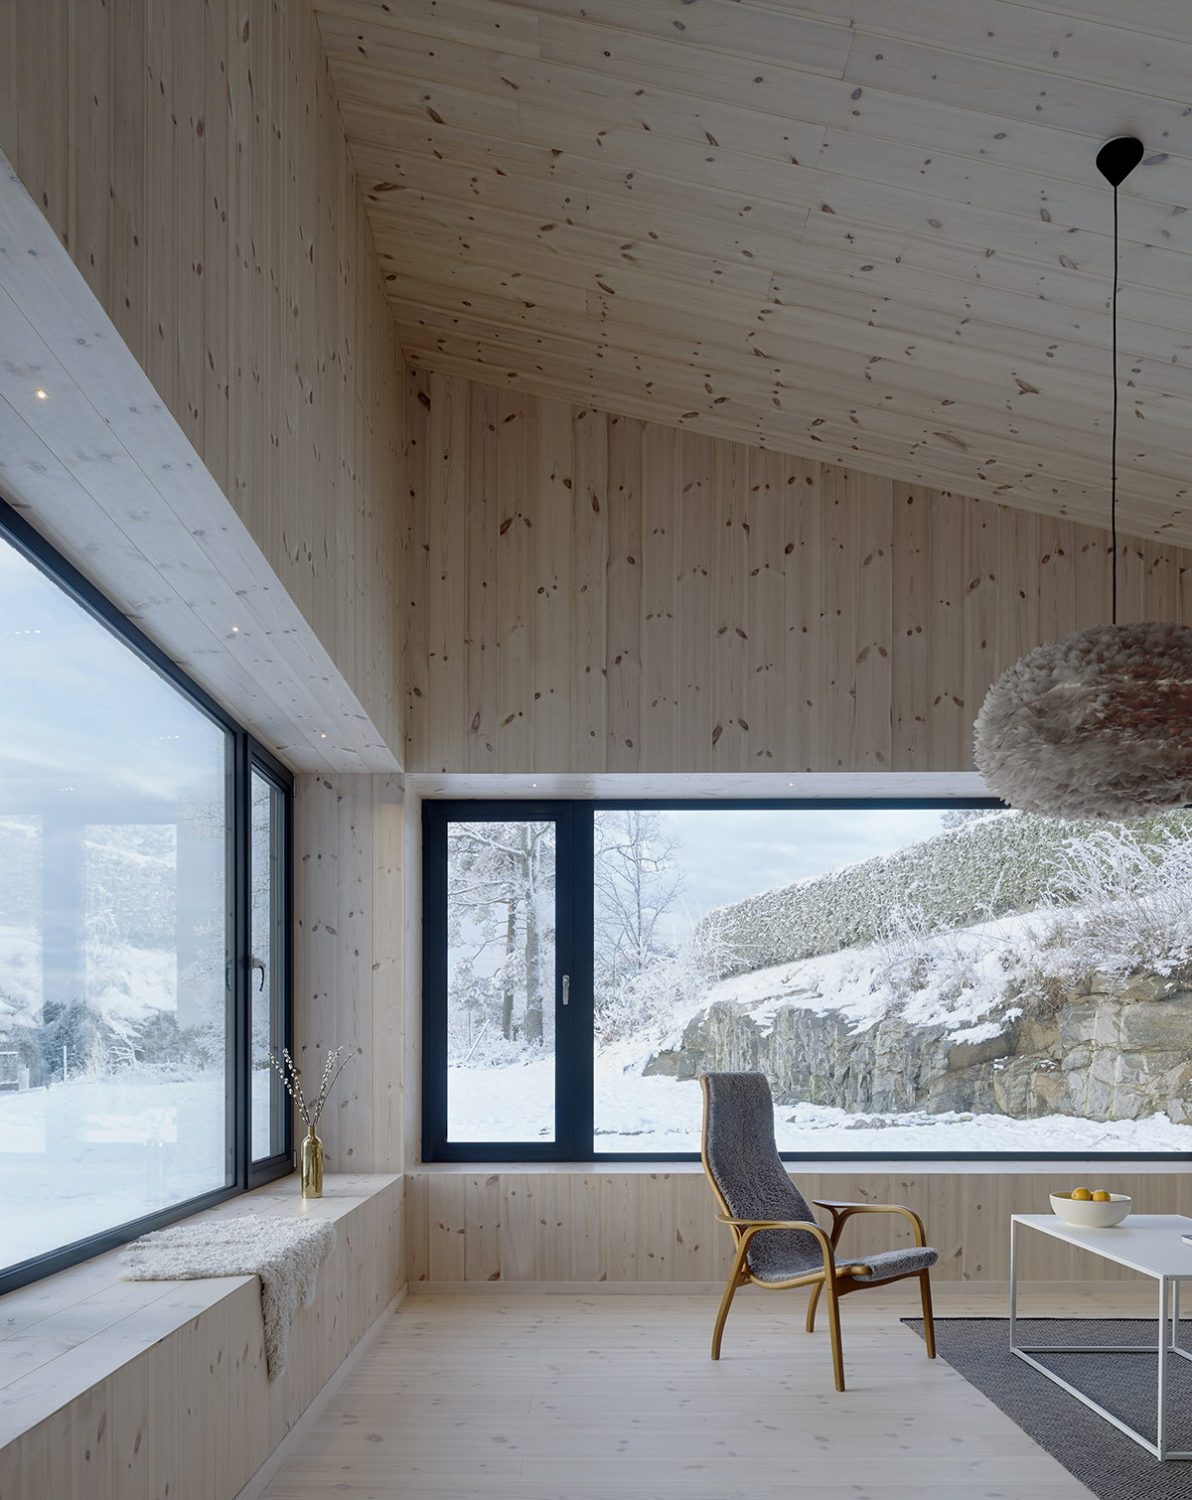 Öjersjö-House by Bornstein Lyckefors Architects